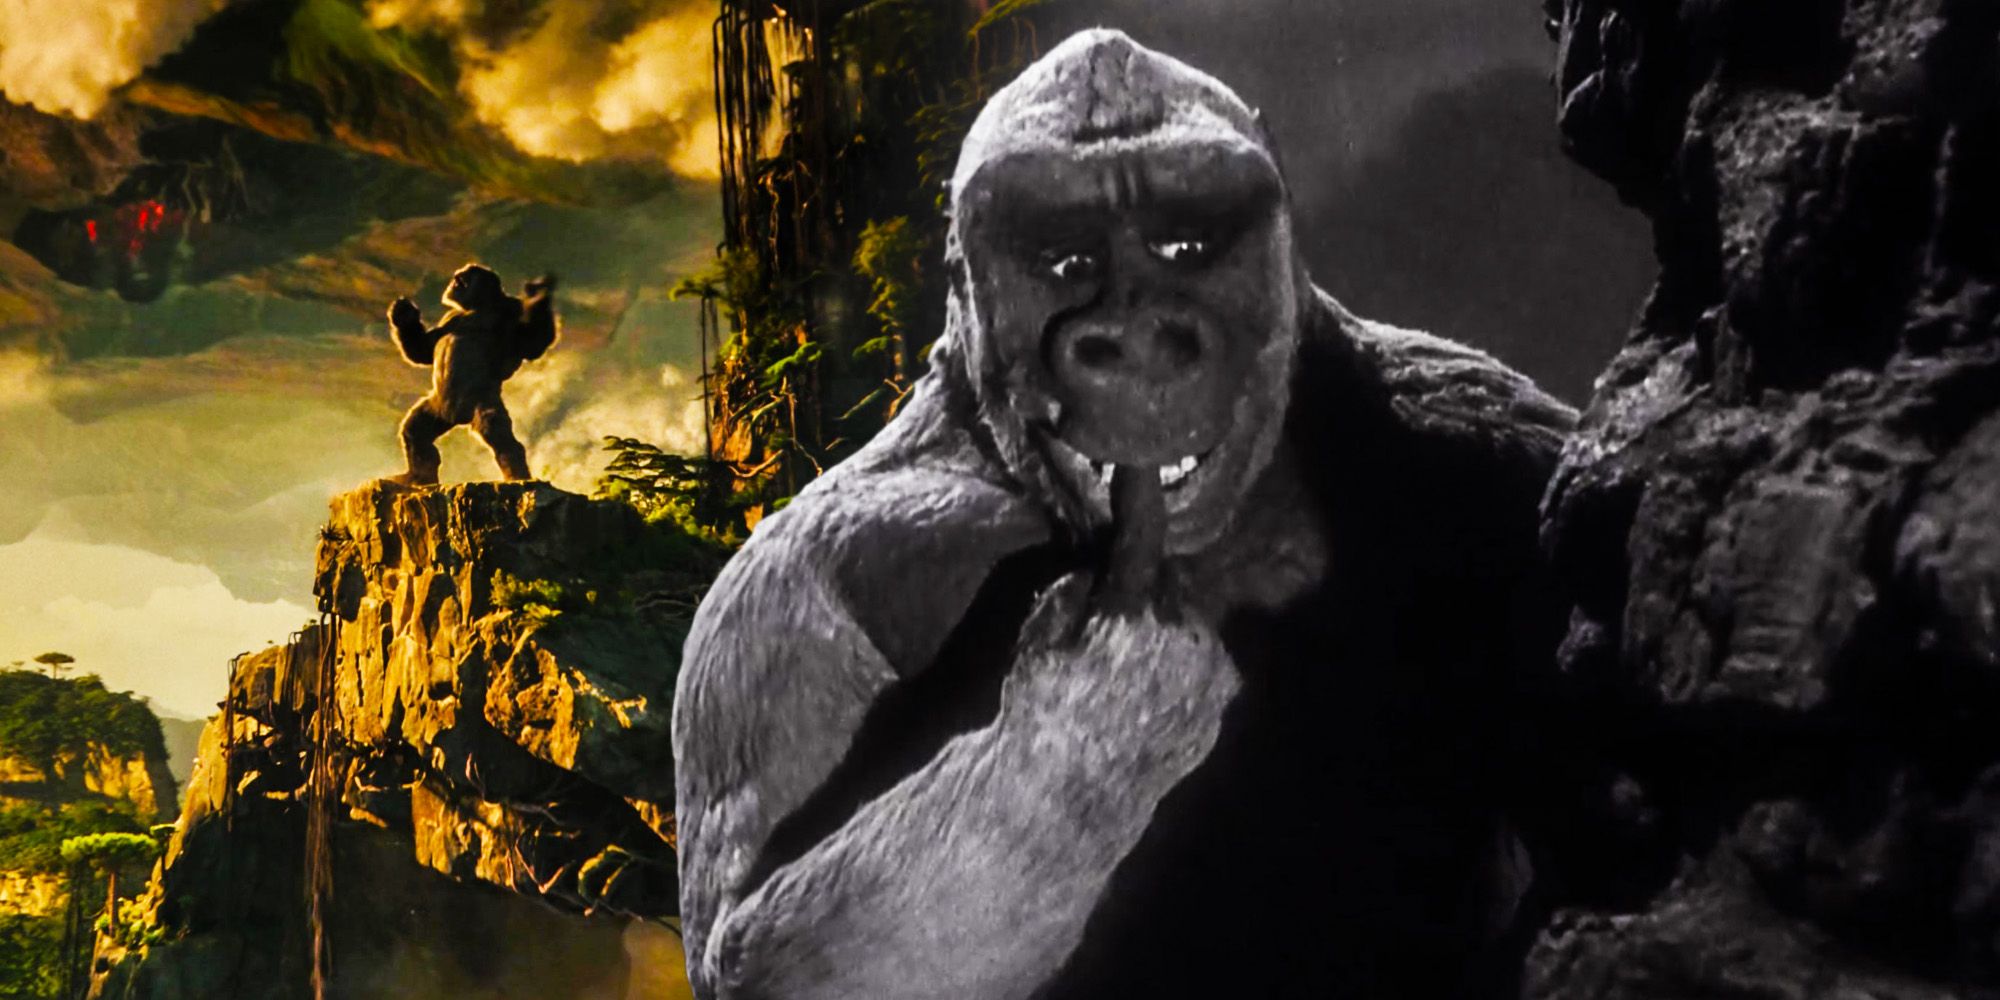 Godzilla vs kong ending too soon for son of kong